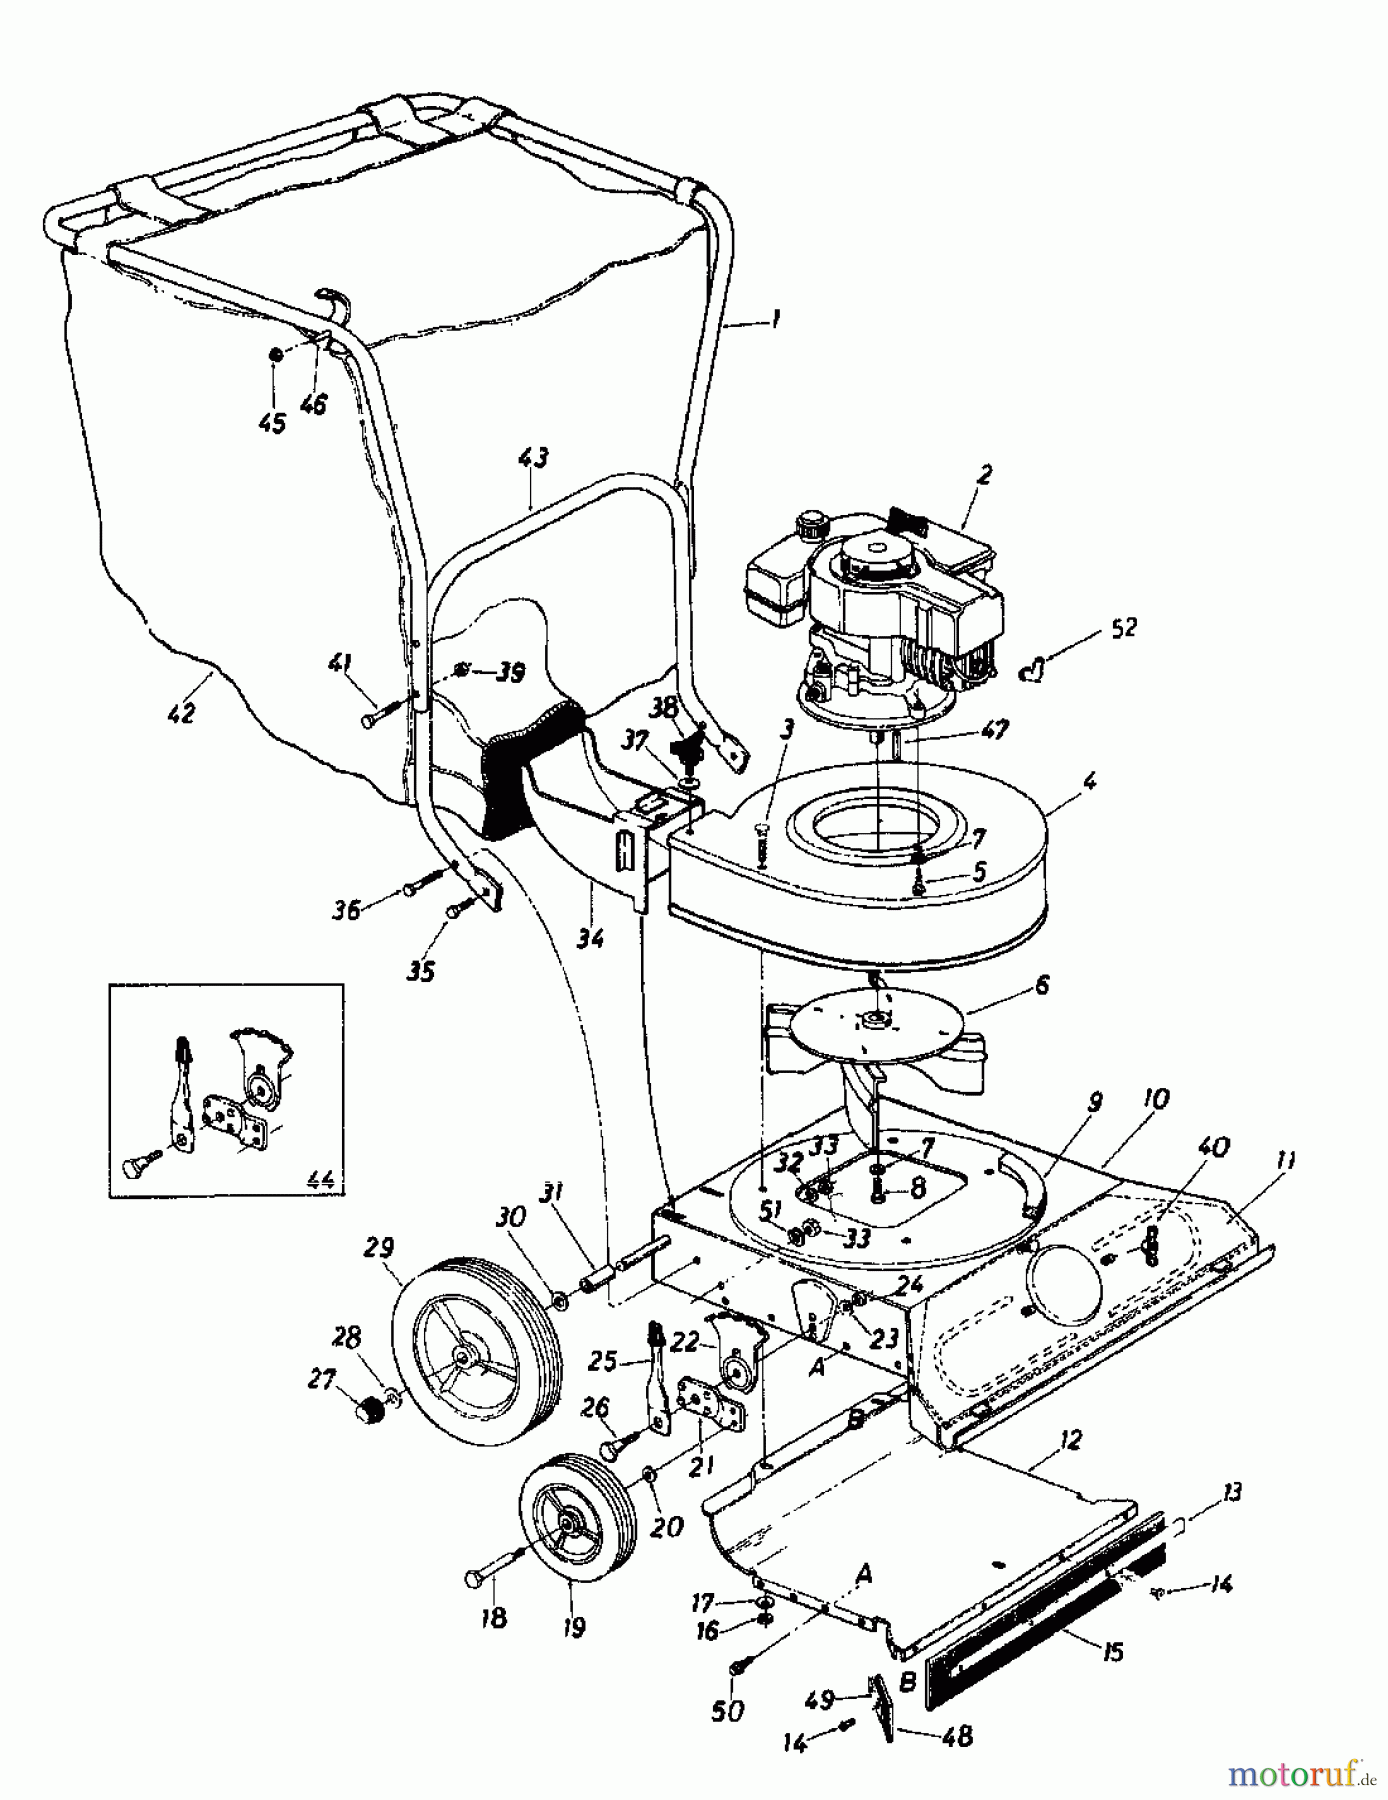  MTD Souffleur de feuille, Aspirateur de feuille Air-Vac 660 245-6600  (1986) Machine de base